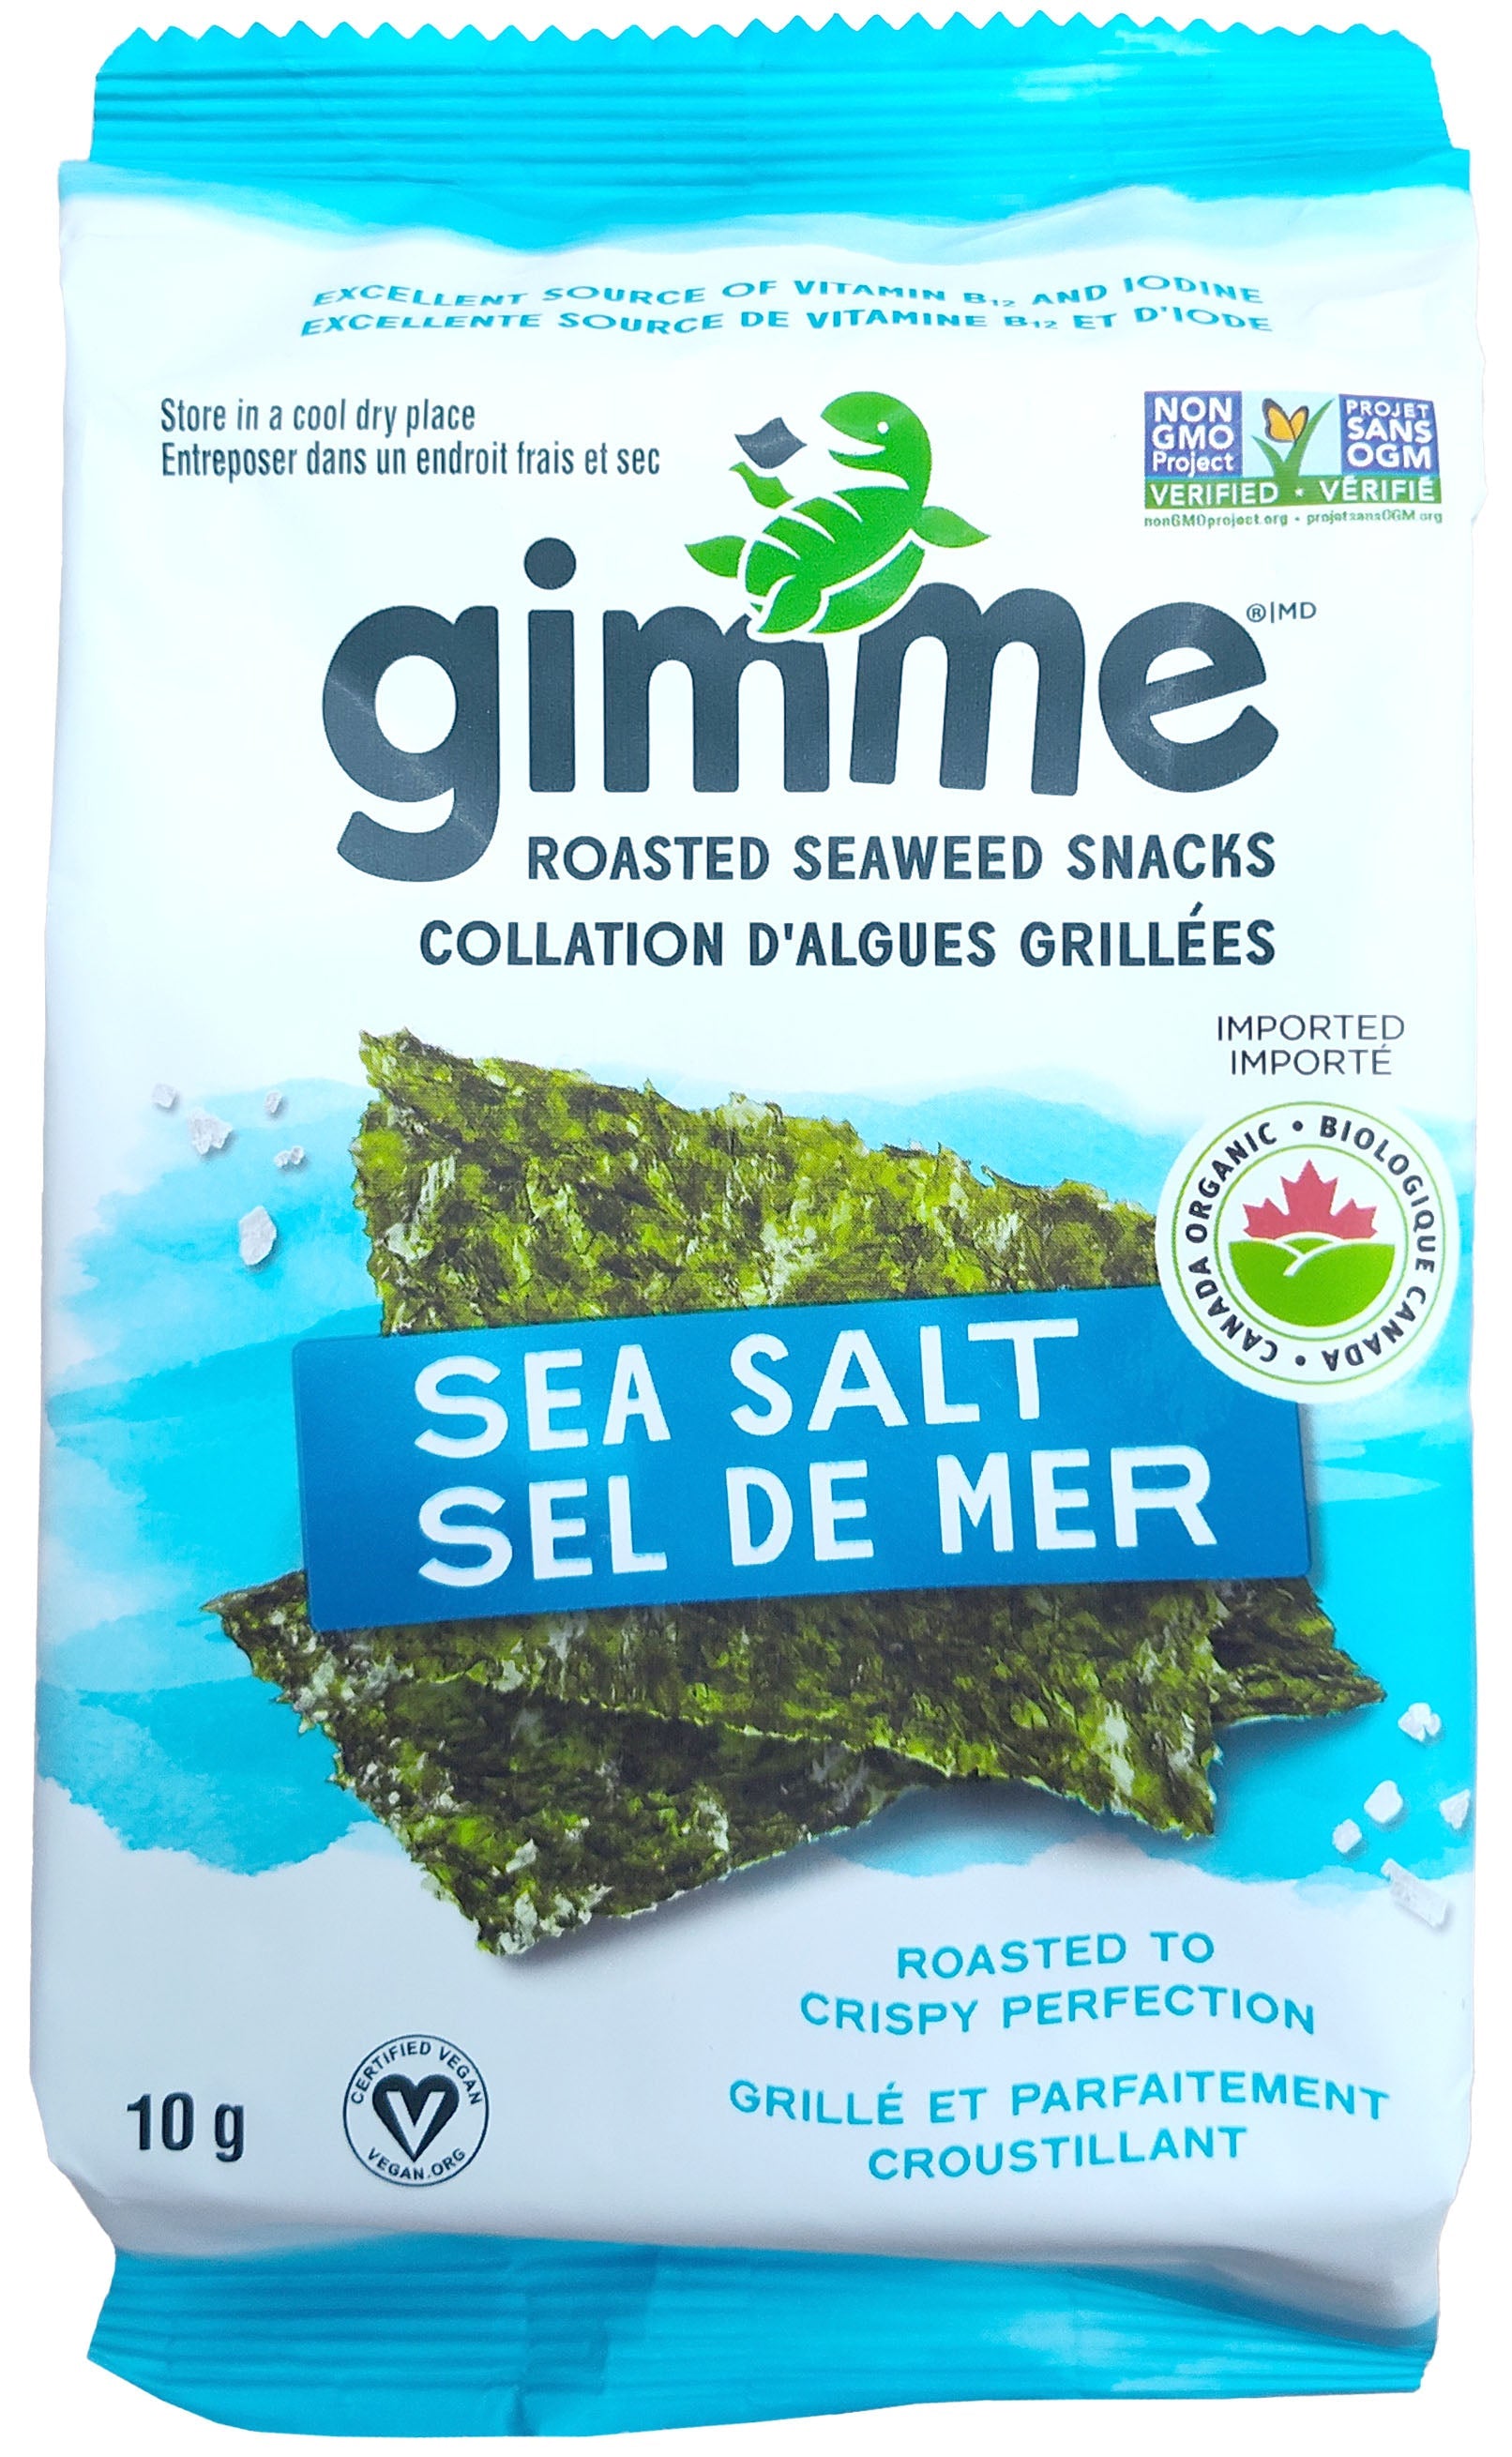 Organic Sea Salt Grilled Seaweed Crisps 10g